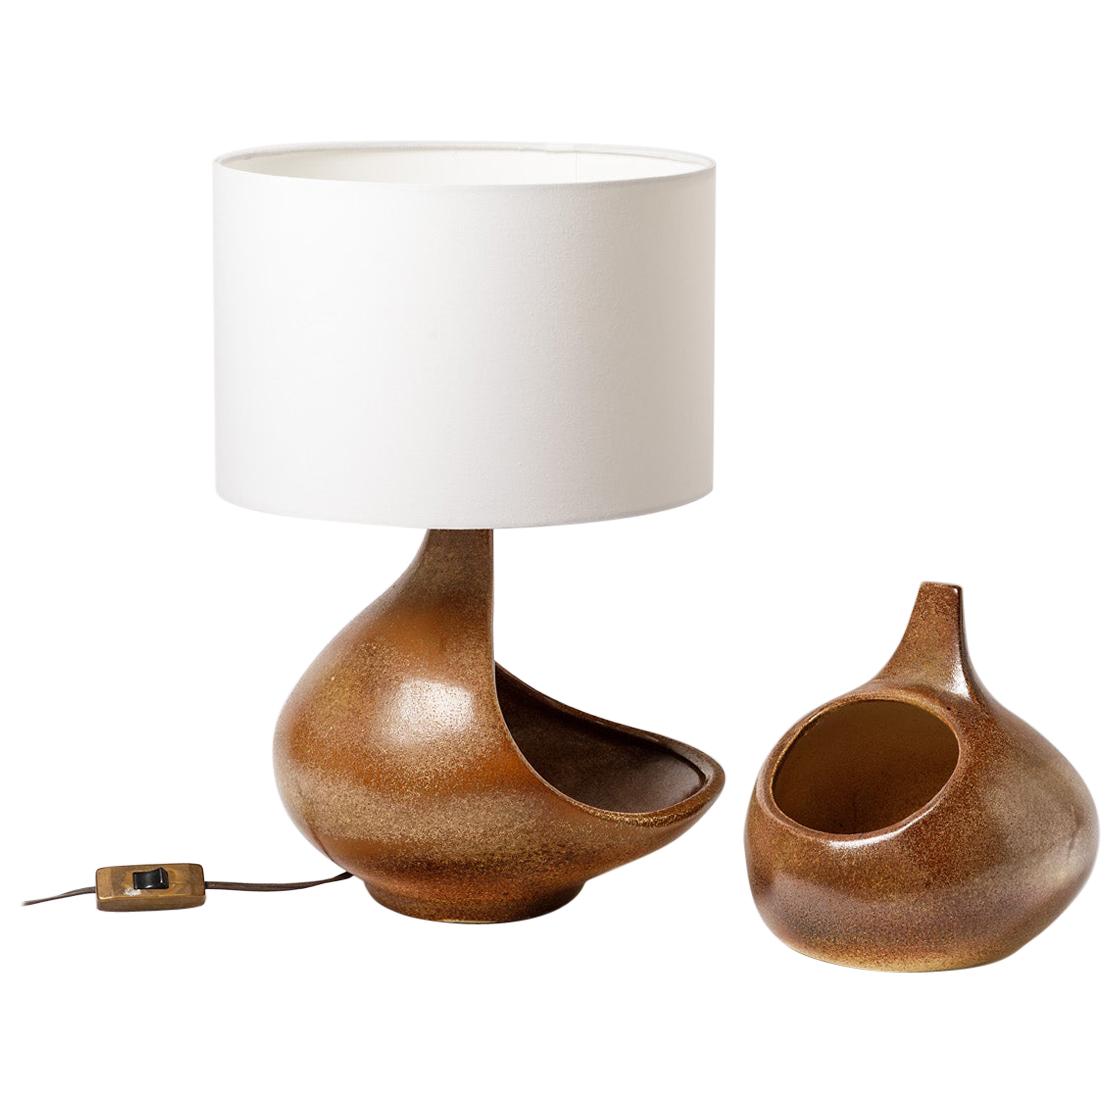 Original Brown Ceramic Table Lamp by Fred Stocker 20th Century Midcentury Design